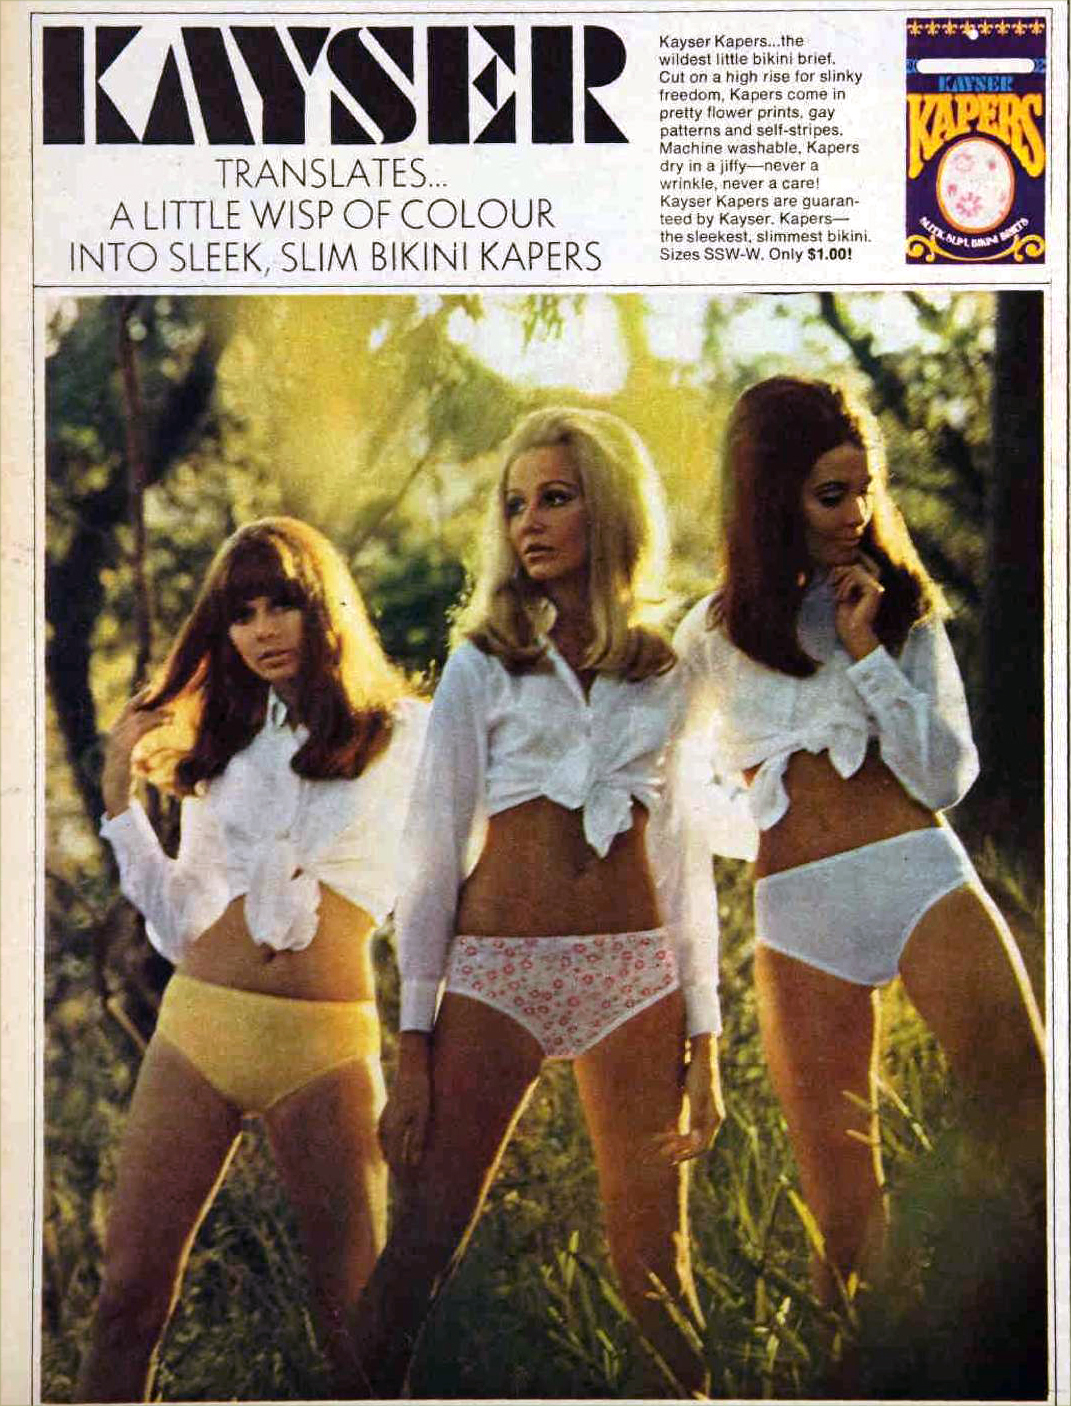 https://flashbak.com/wp-content/uploads/2017/09/The_Australian_Womens_Weekly_04_09_1968-undergarments-ad.jpg